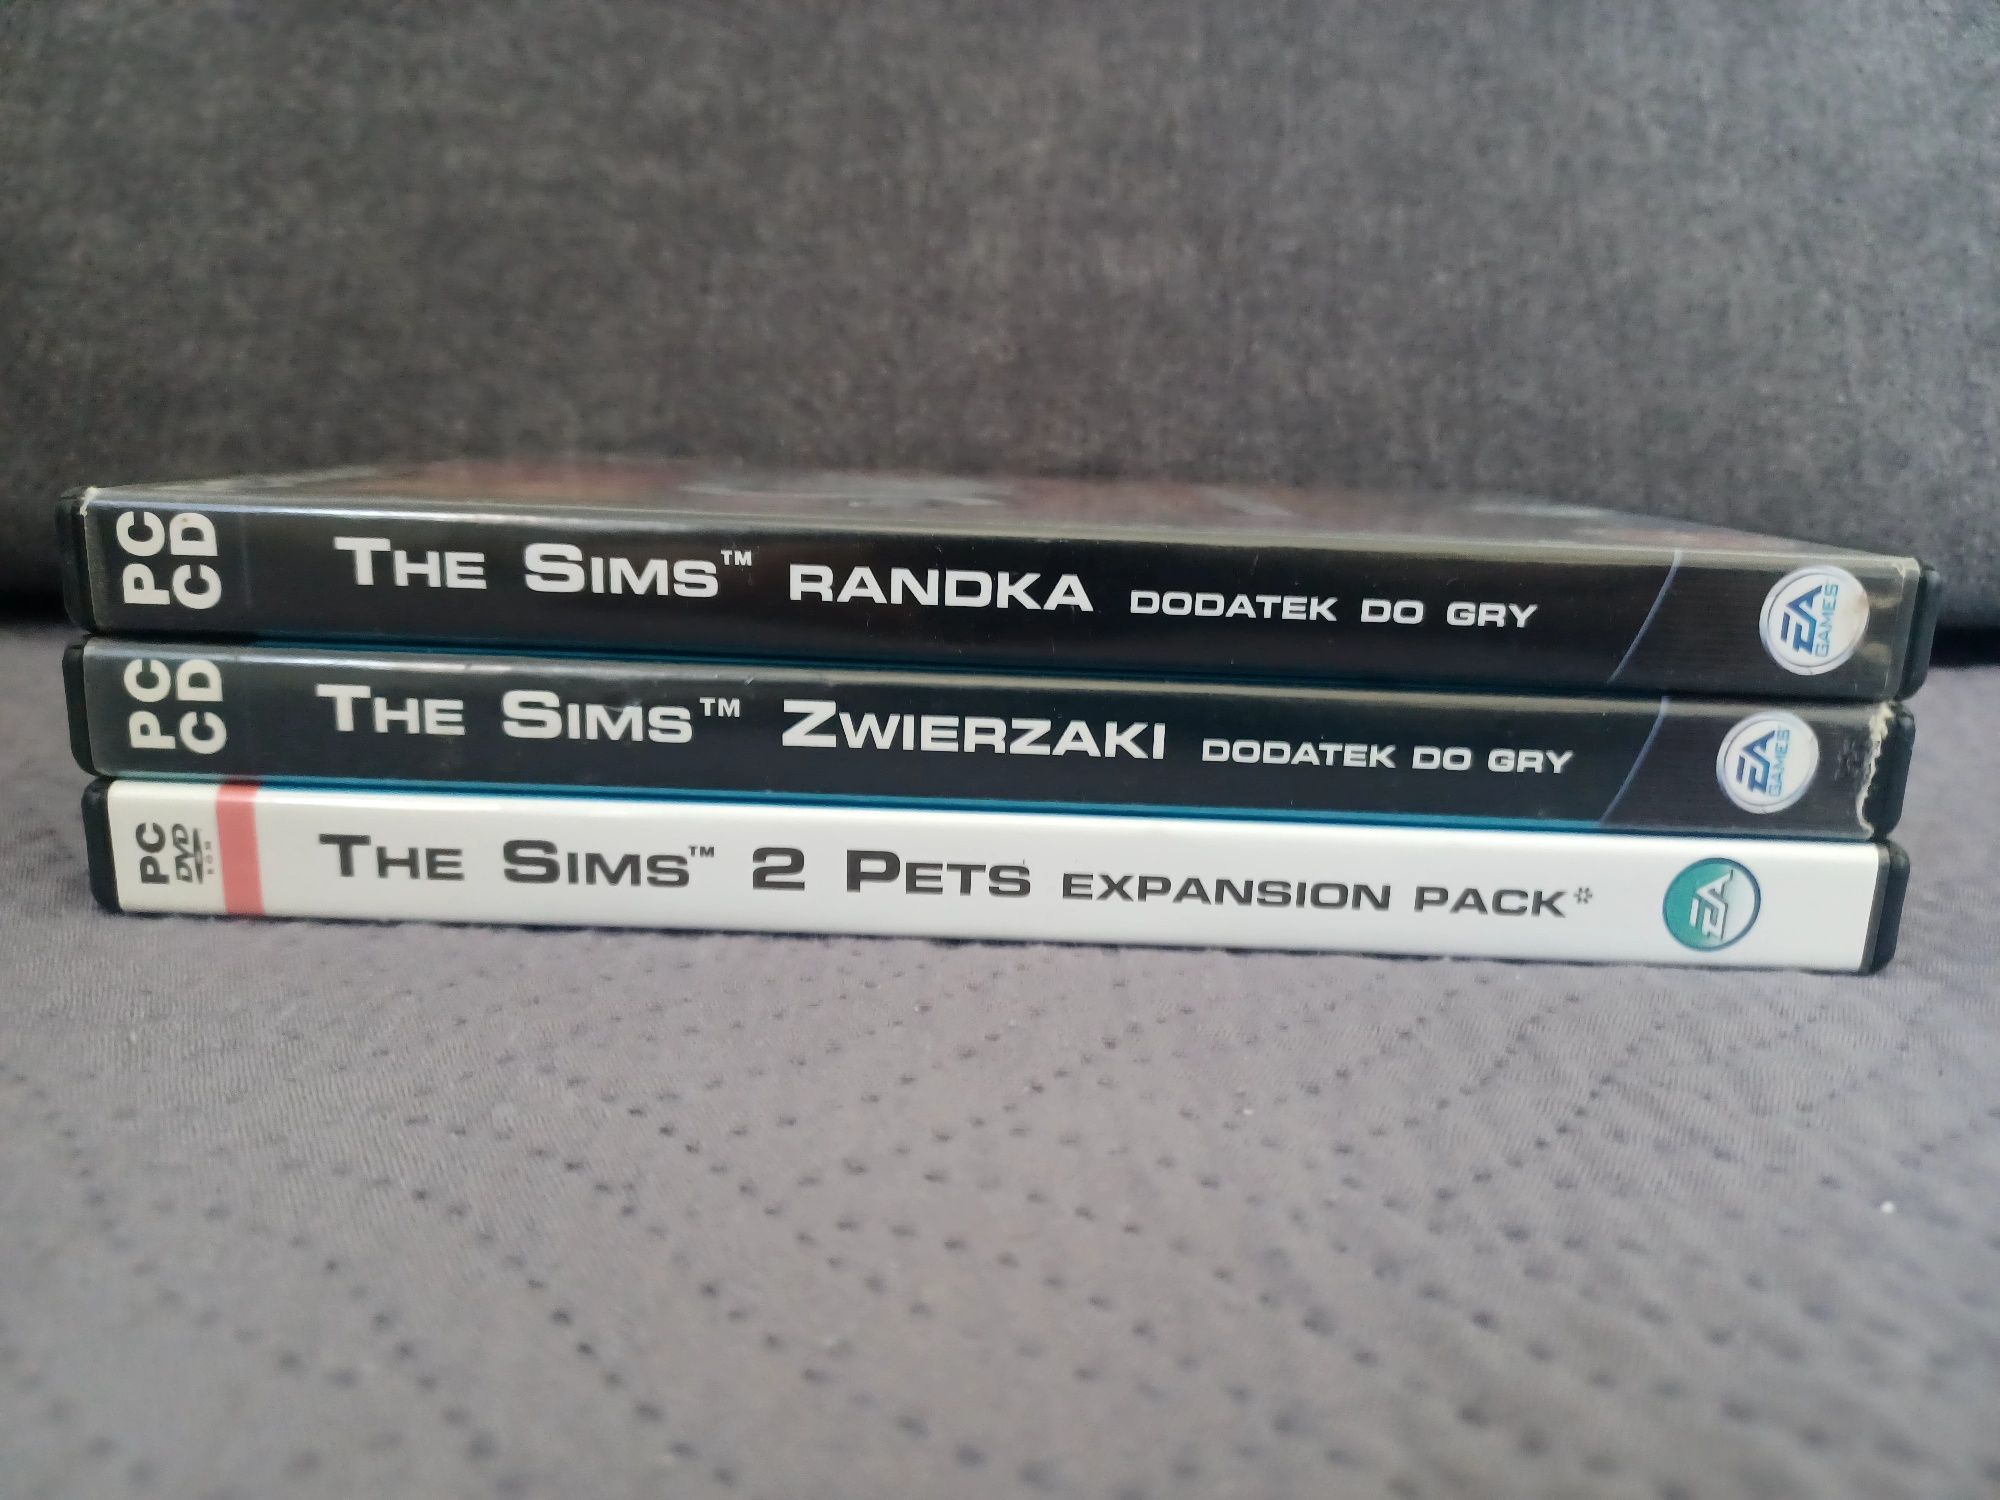 The sims 1 i 2 (cena za całość+gratis)